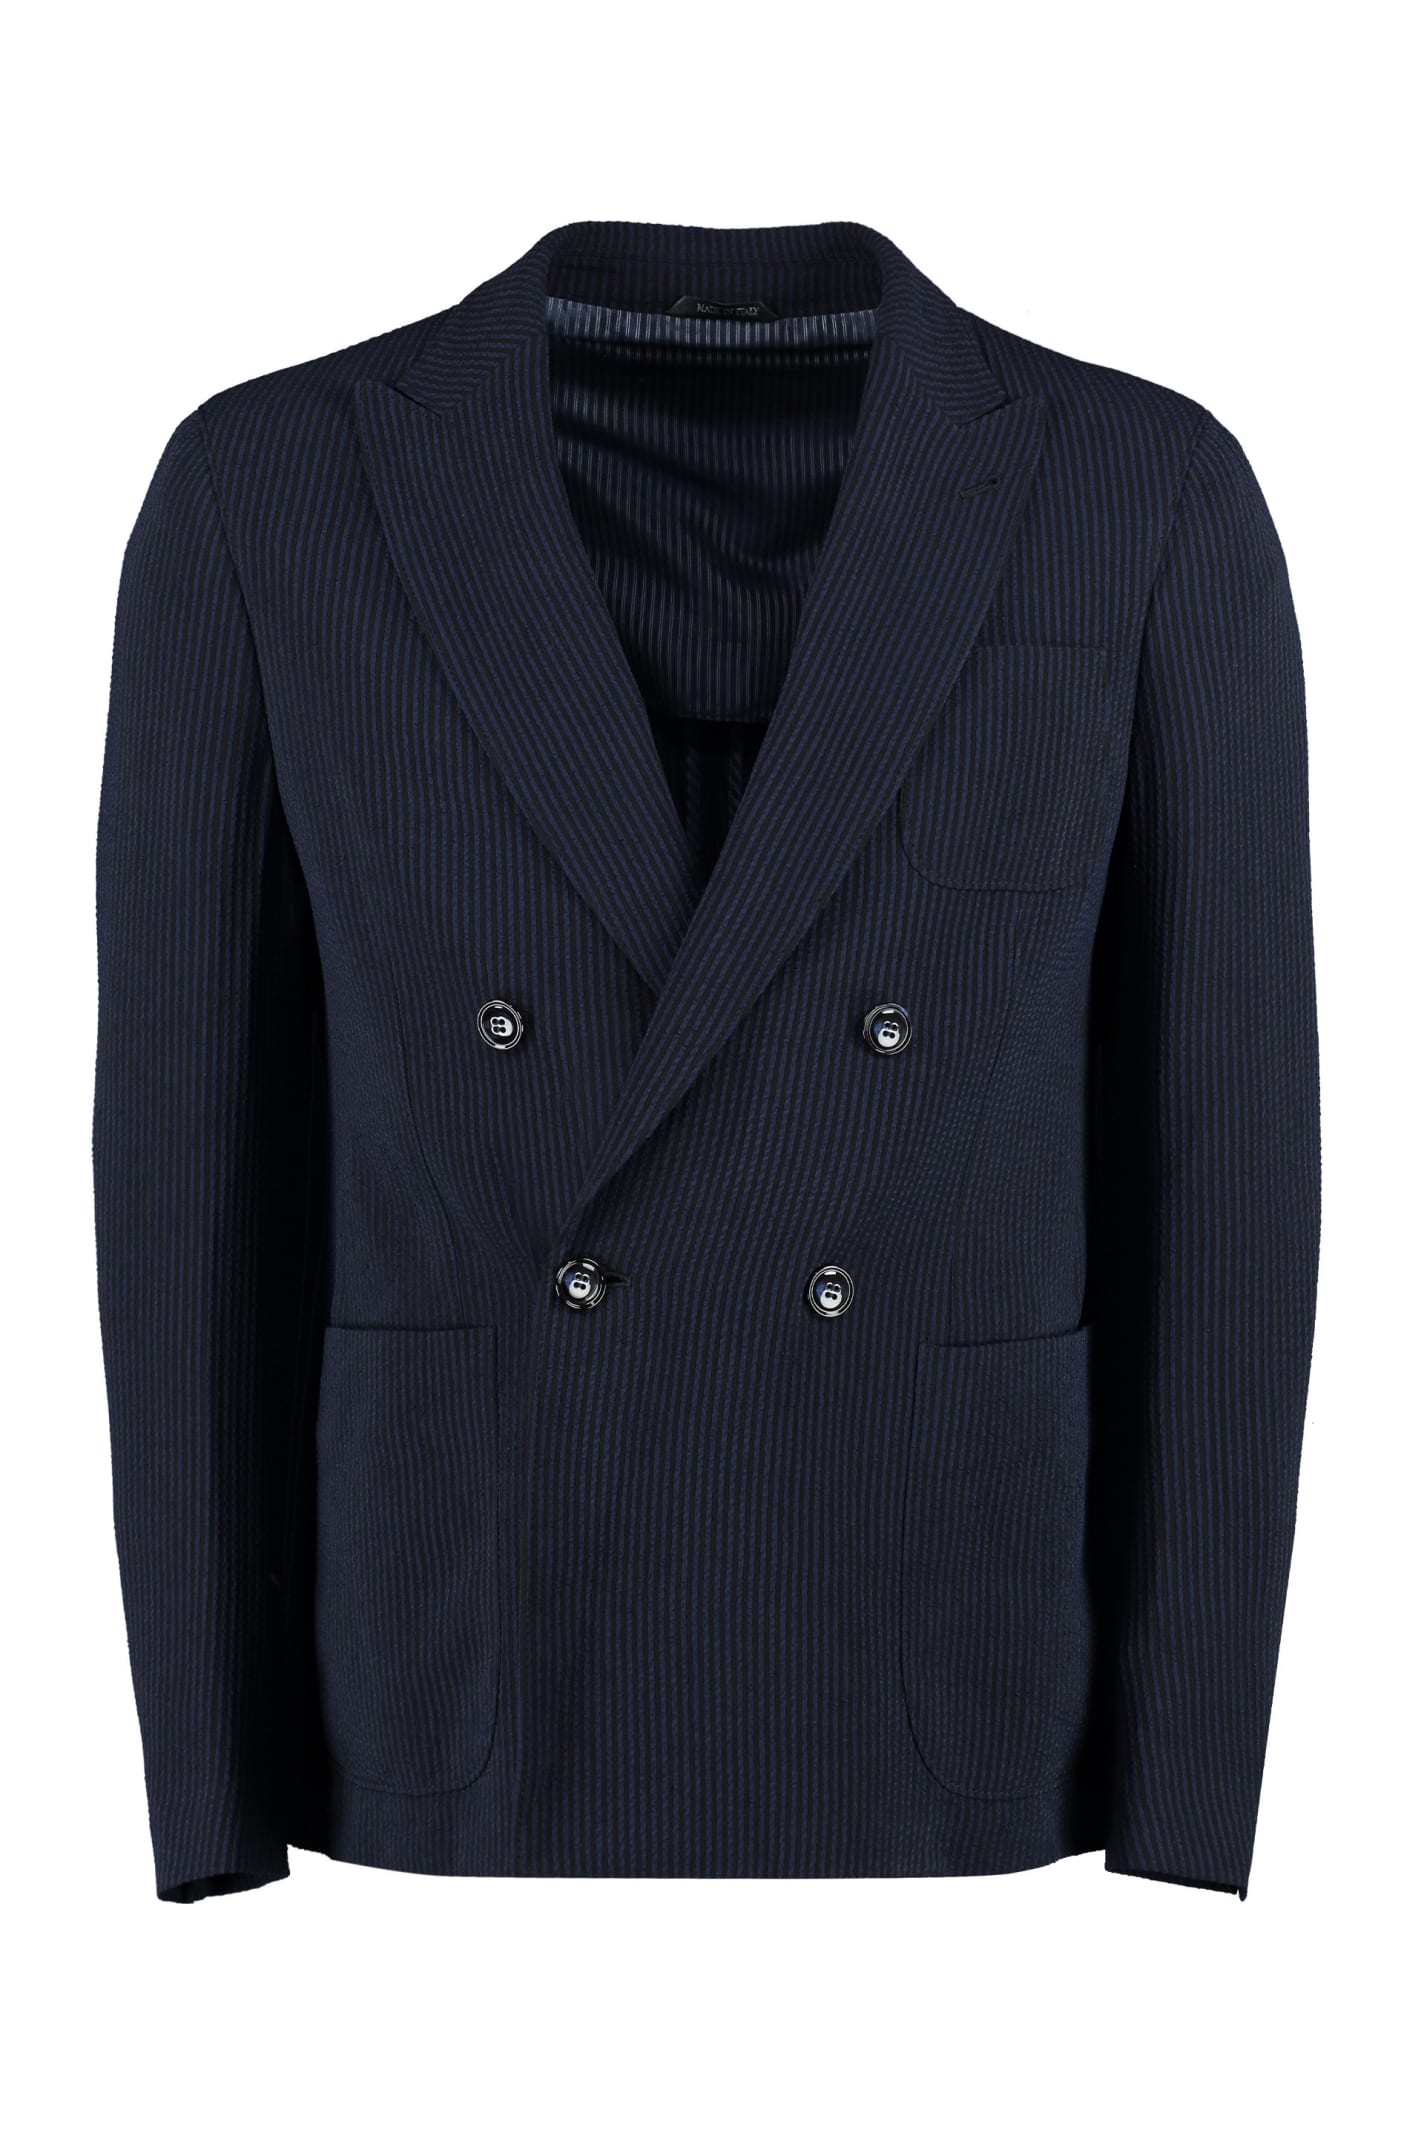 Giorgio Armani Double-breasted Jacket In Black